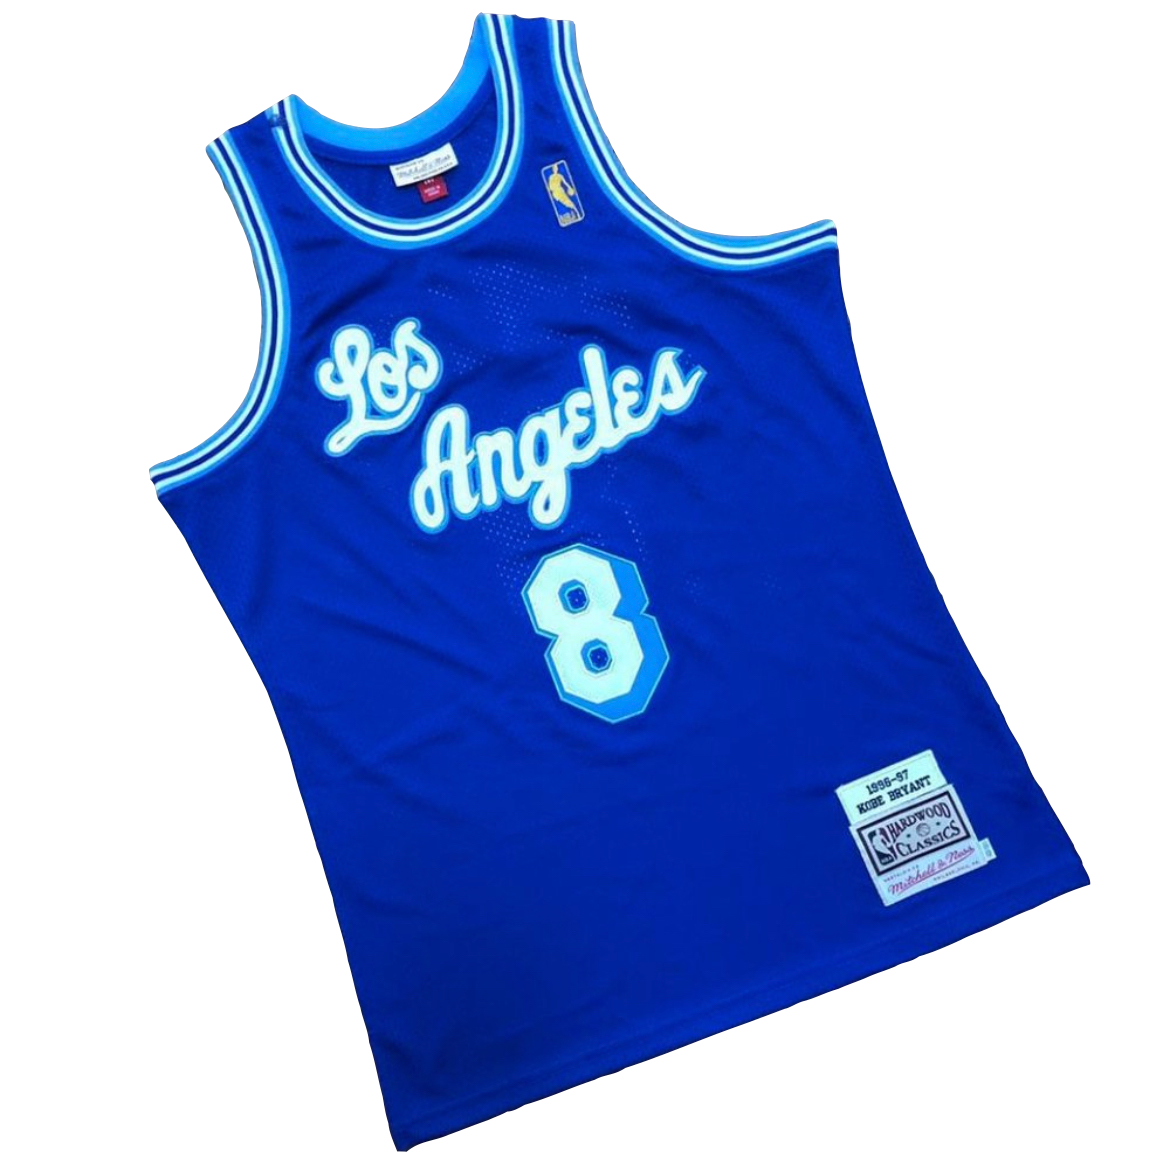 Mitchell & Ness, Other, Kobe Bryant 9961997 Lakers Jersey Royal Blue